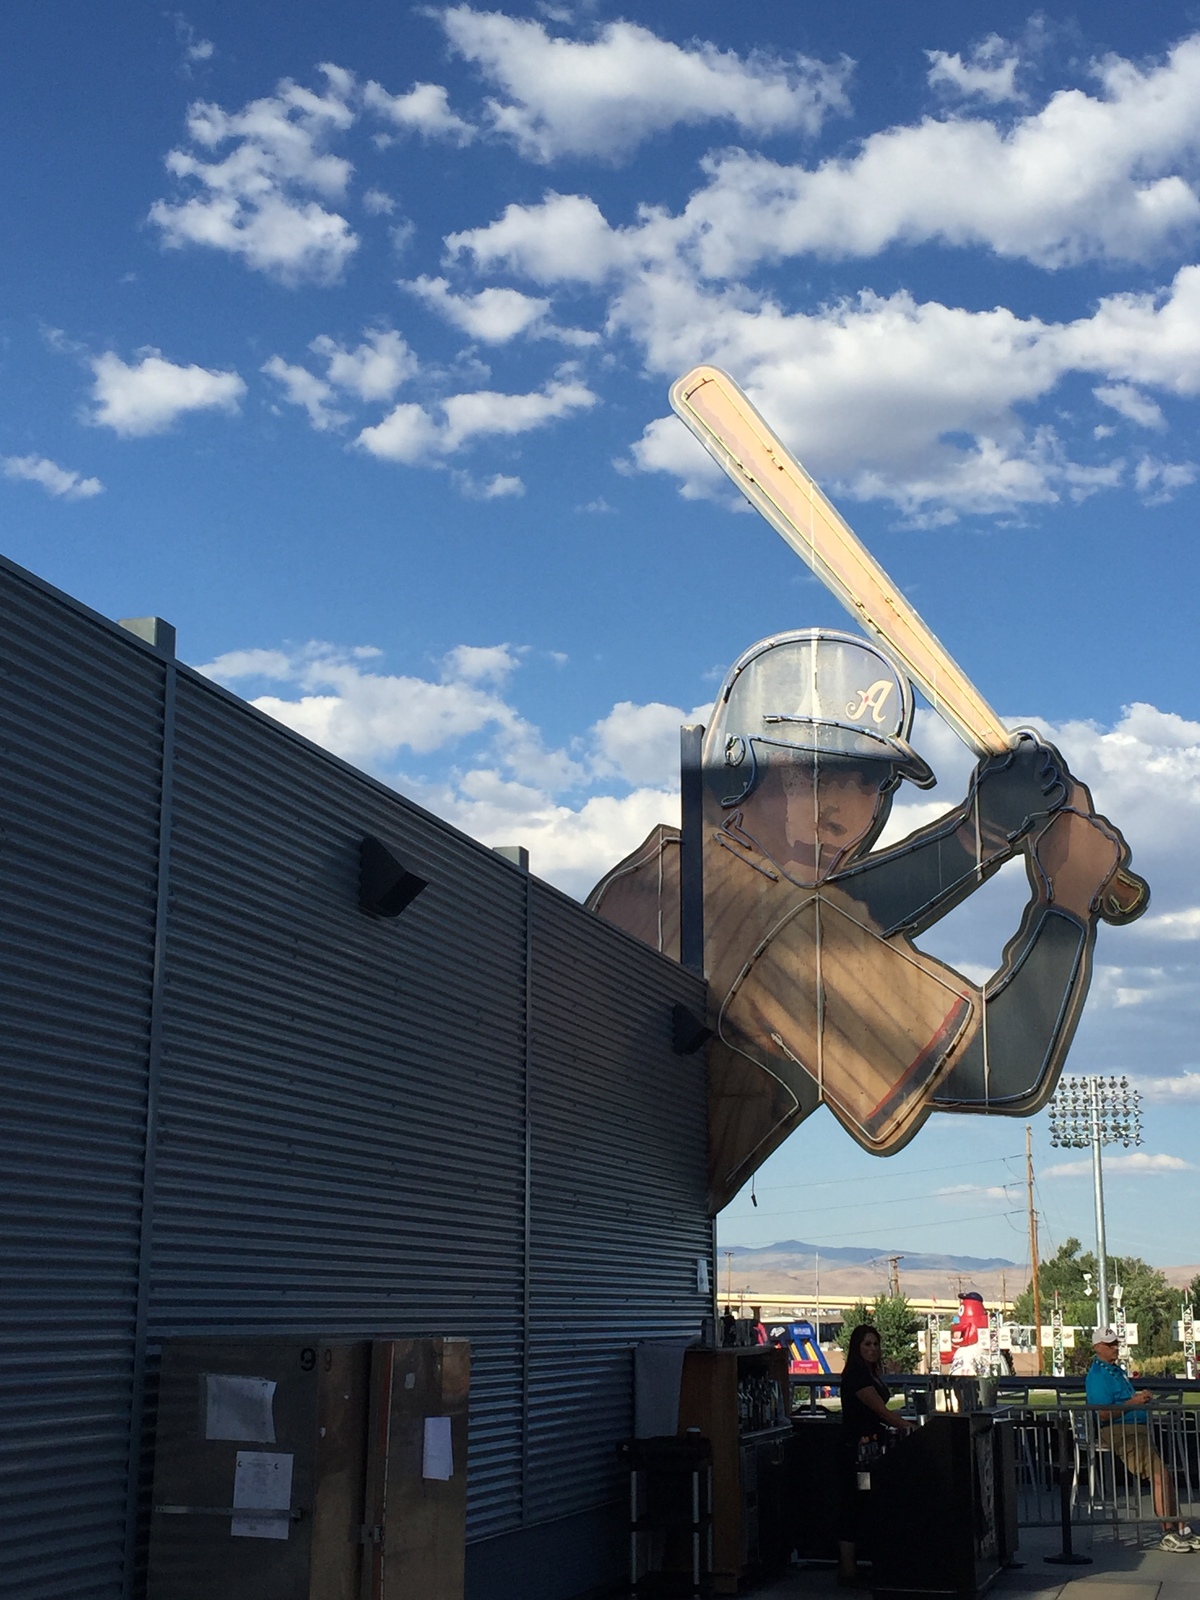 Mascot, Reno Aces Baseball, Reno, NV - Picture of Greater Nevada